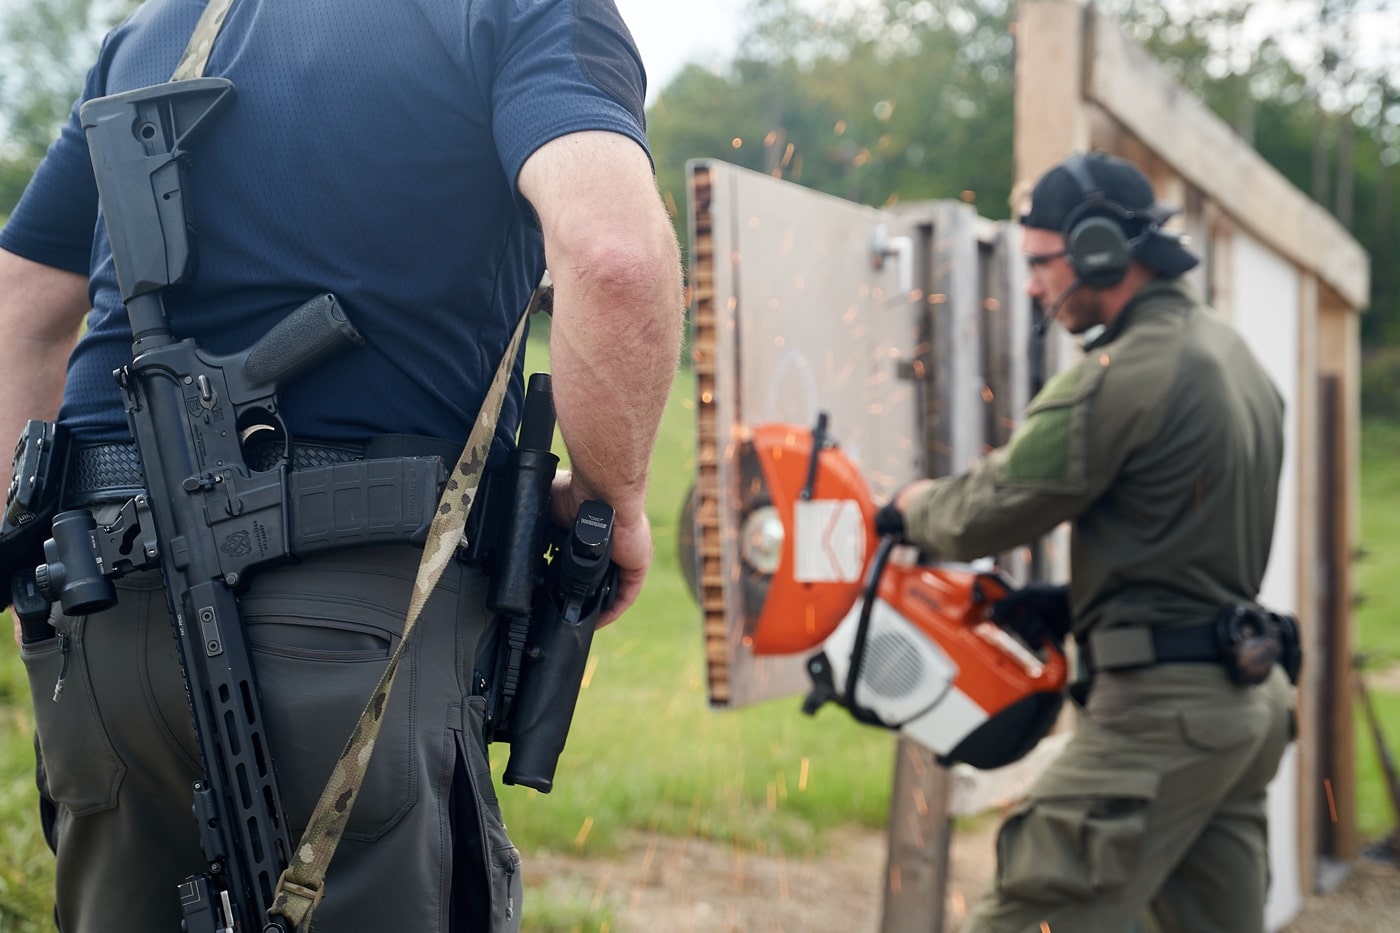 swat use sbr short barrel rifle springfield saint